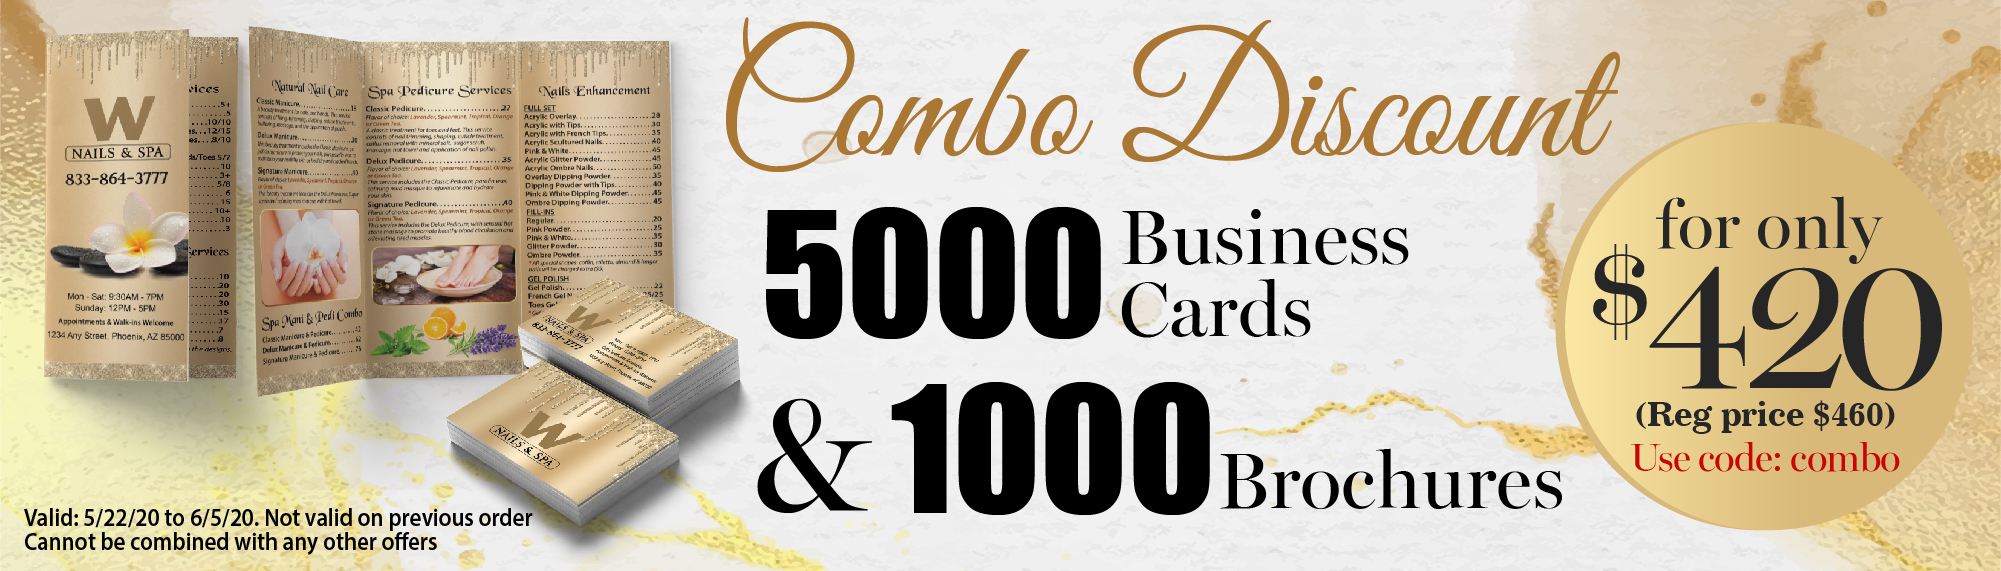 Save $40 on Business Cards & Brochures order